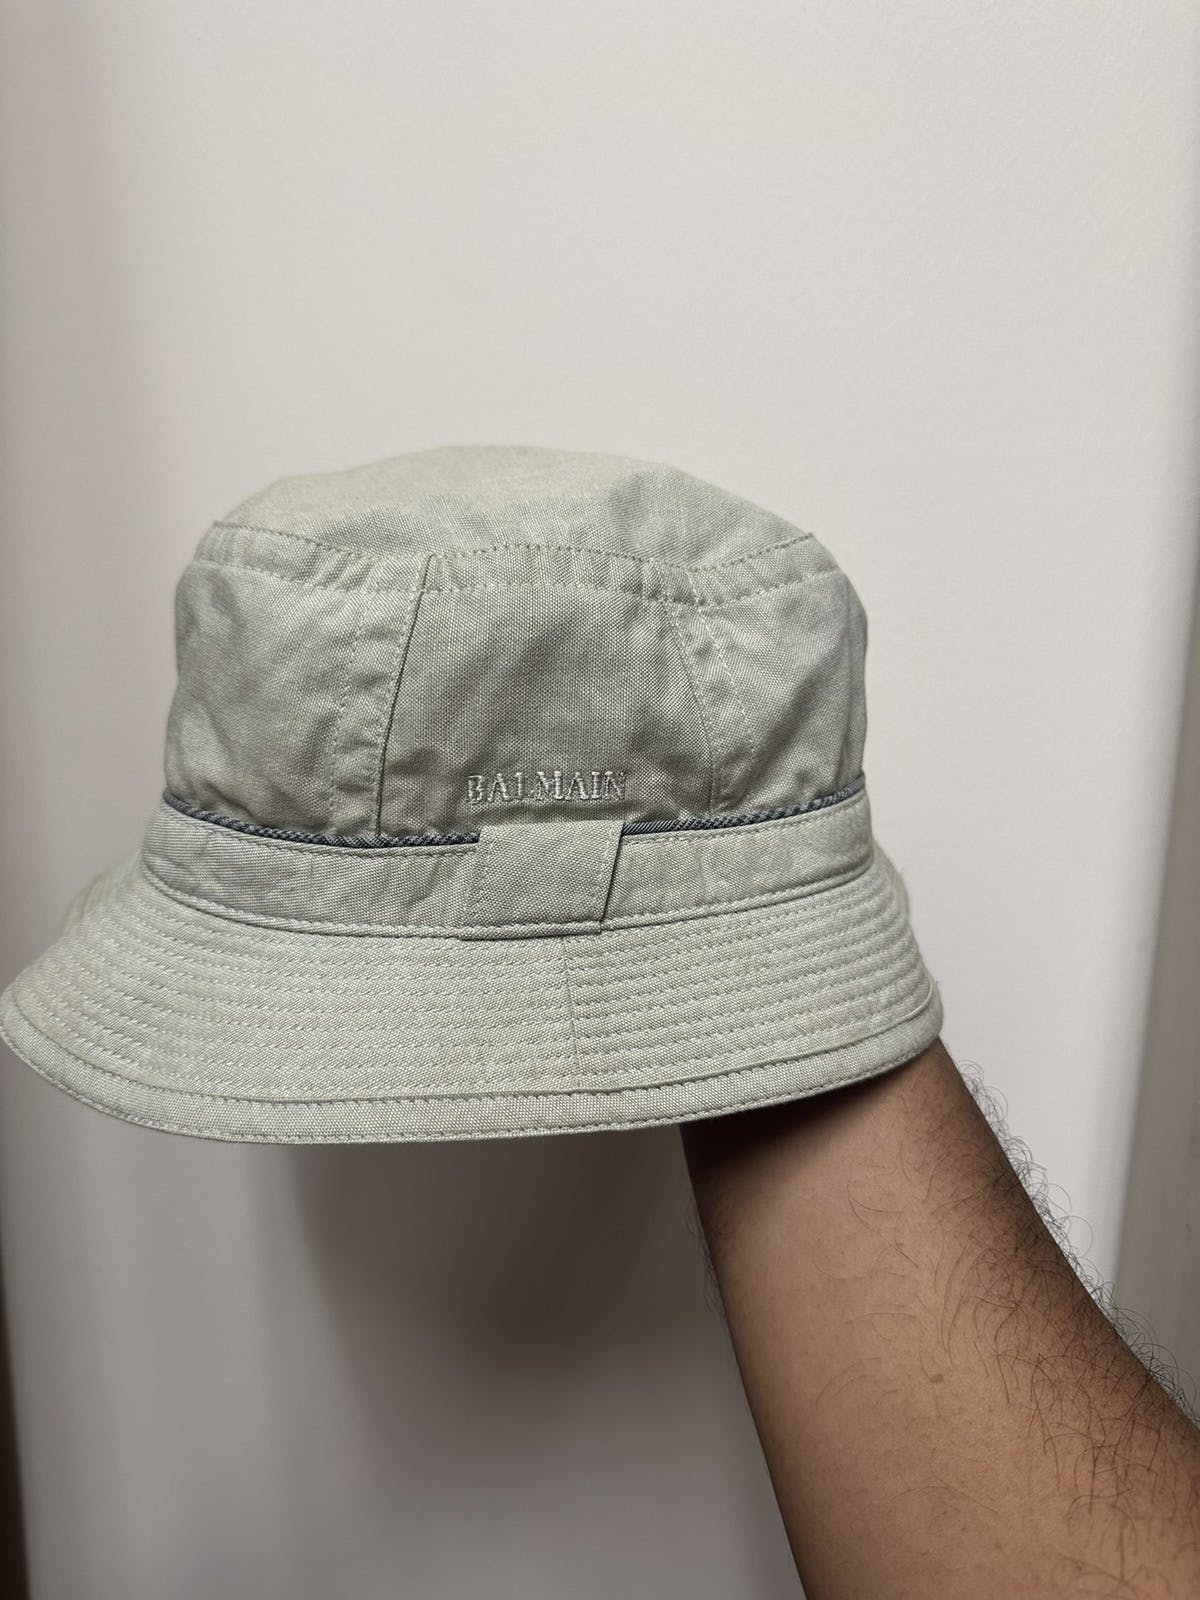 VTG Balmain Bucket Hat - 2